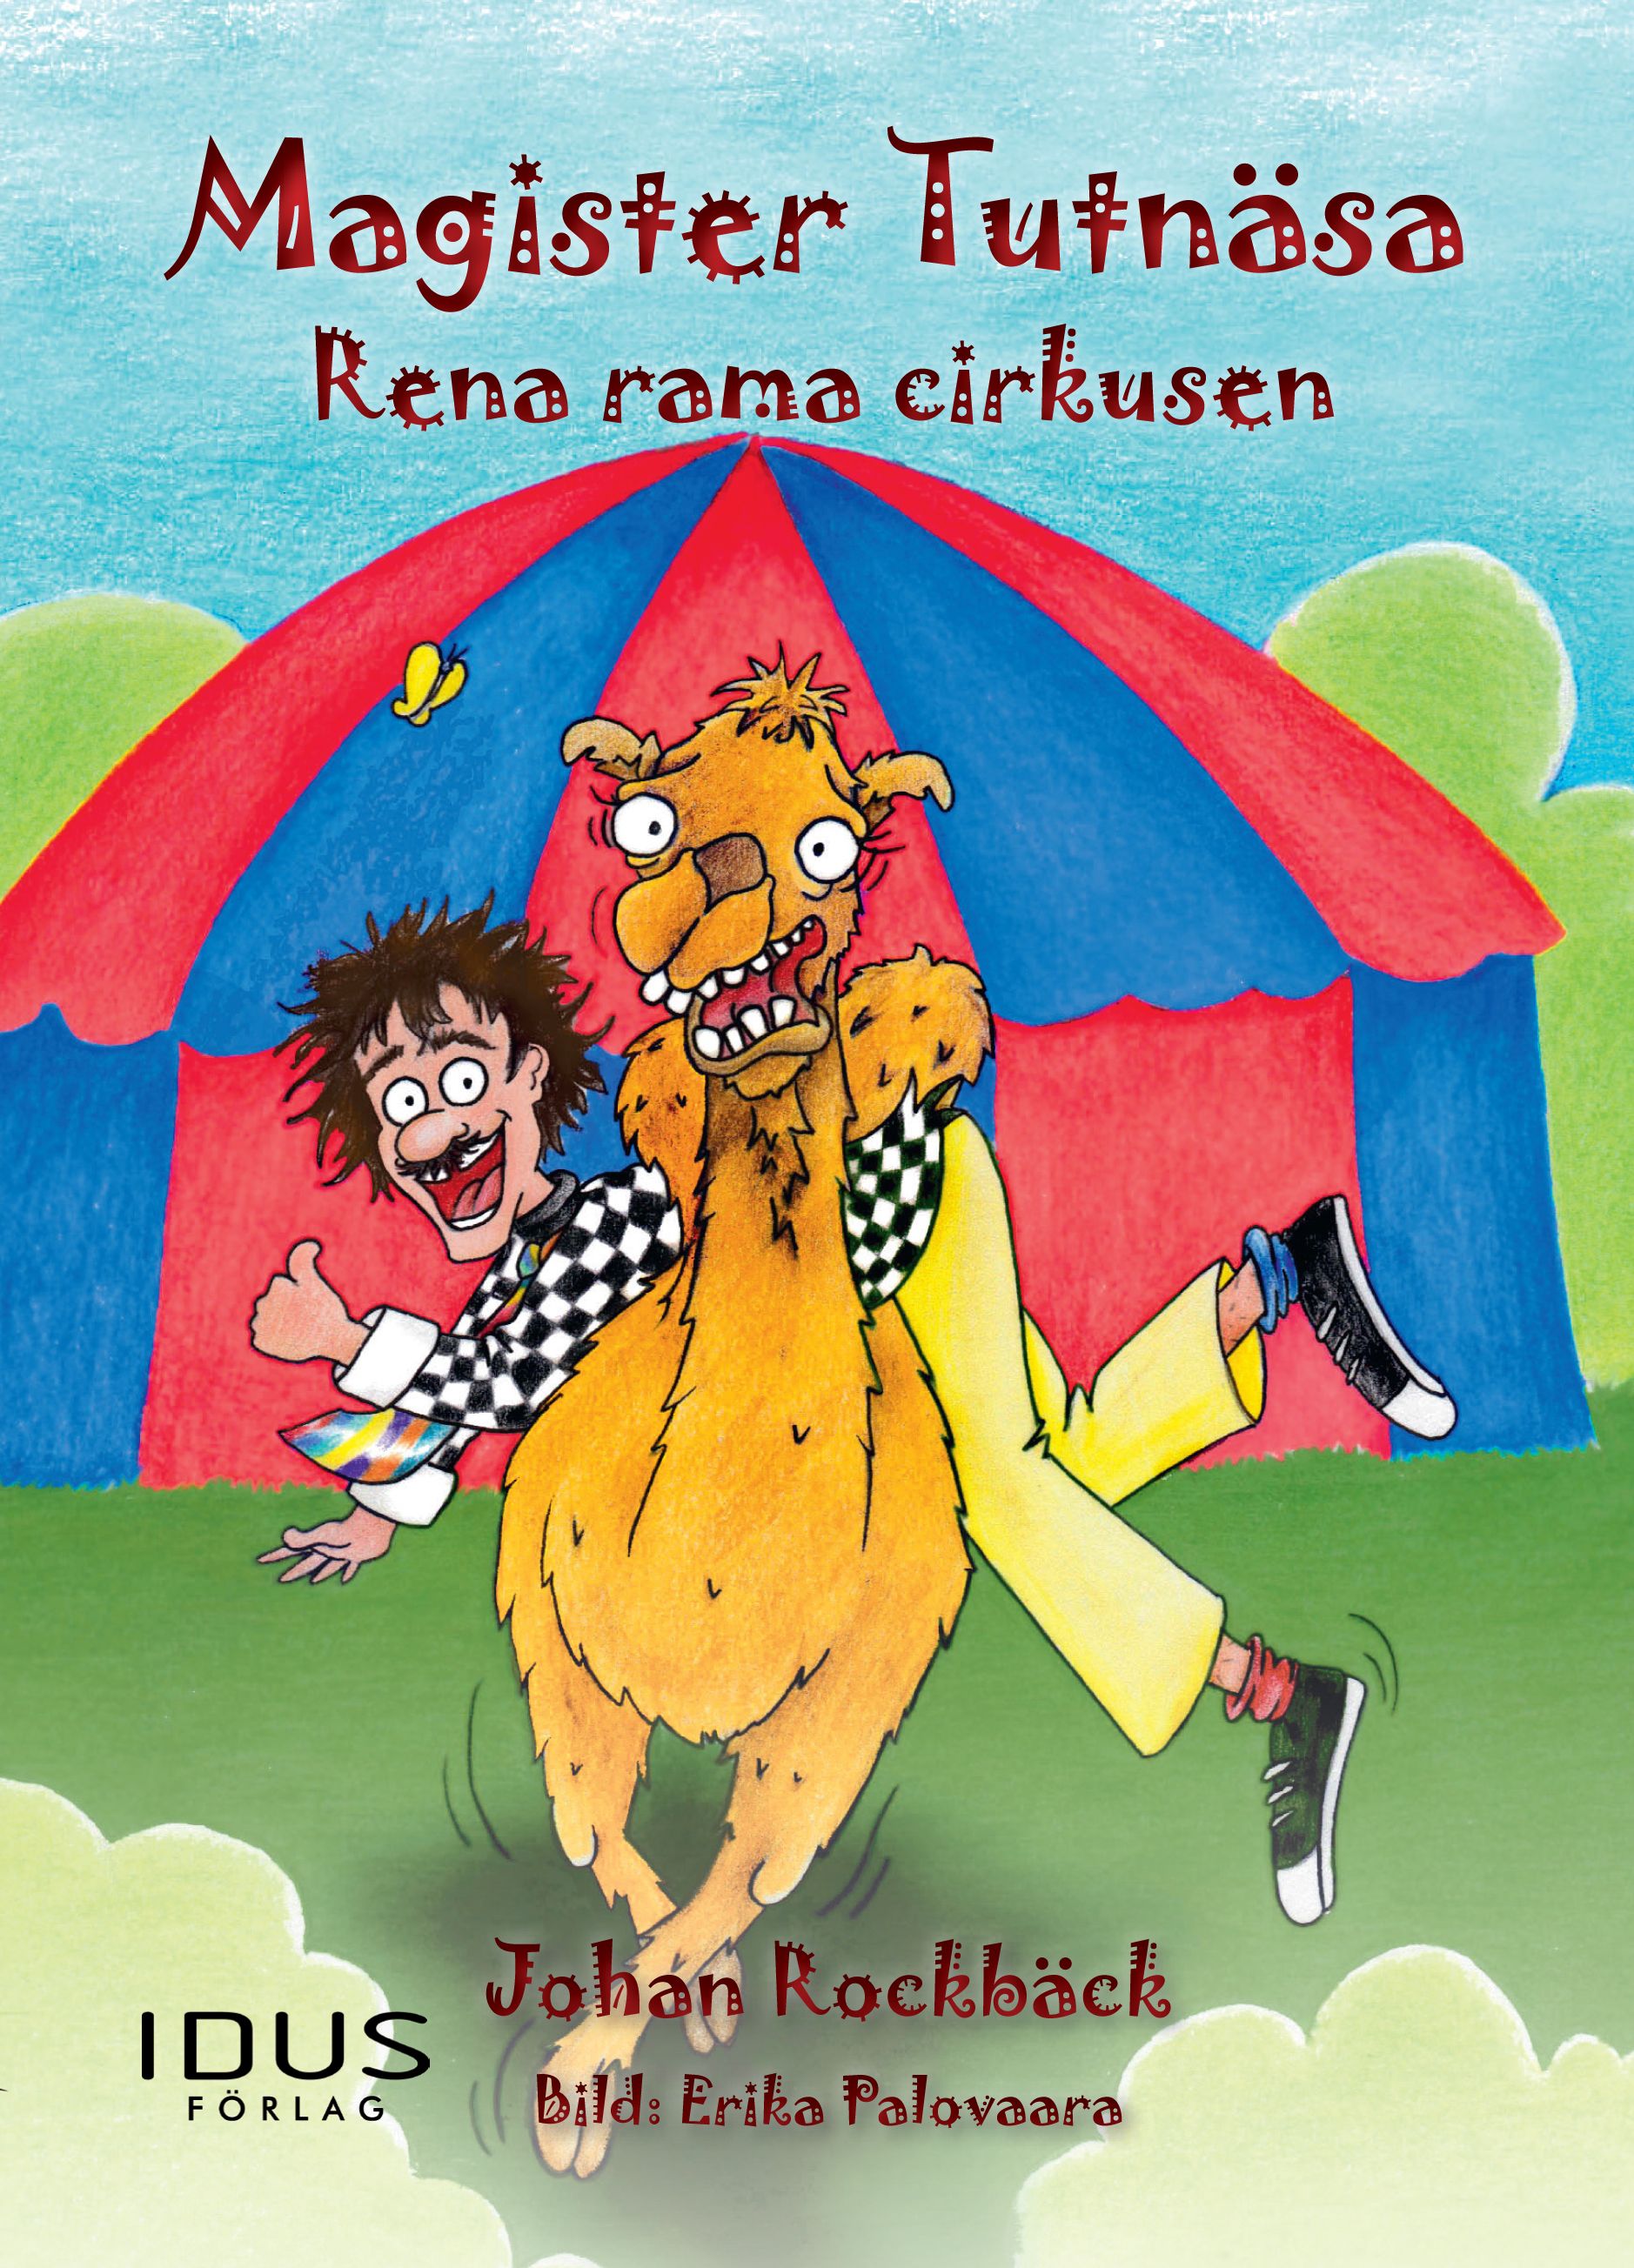 Magister Tutnäsa : rena rama cirkusen, e-bog af Johan Rockbäck